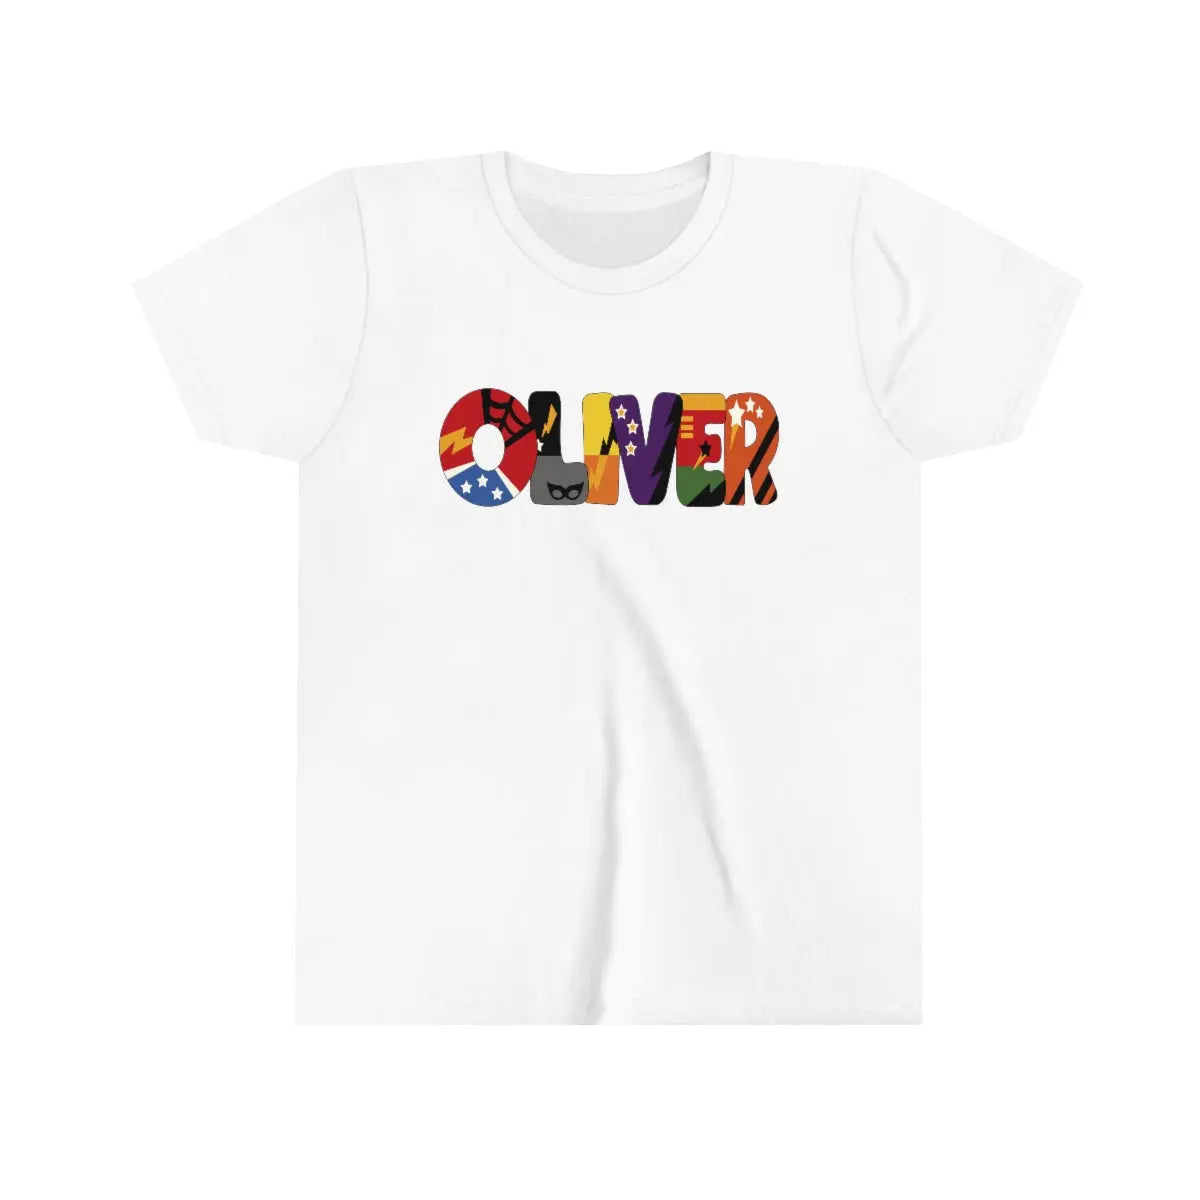 Superhero Personalized Youth Child's T-shirt S M L XL | Kid's Birthday Gift Printify